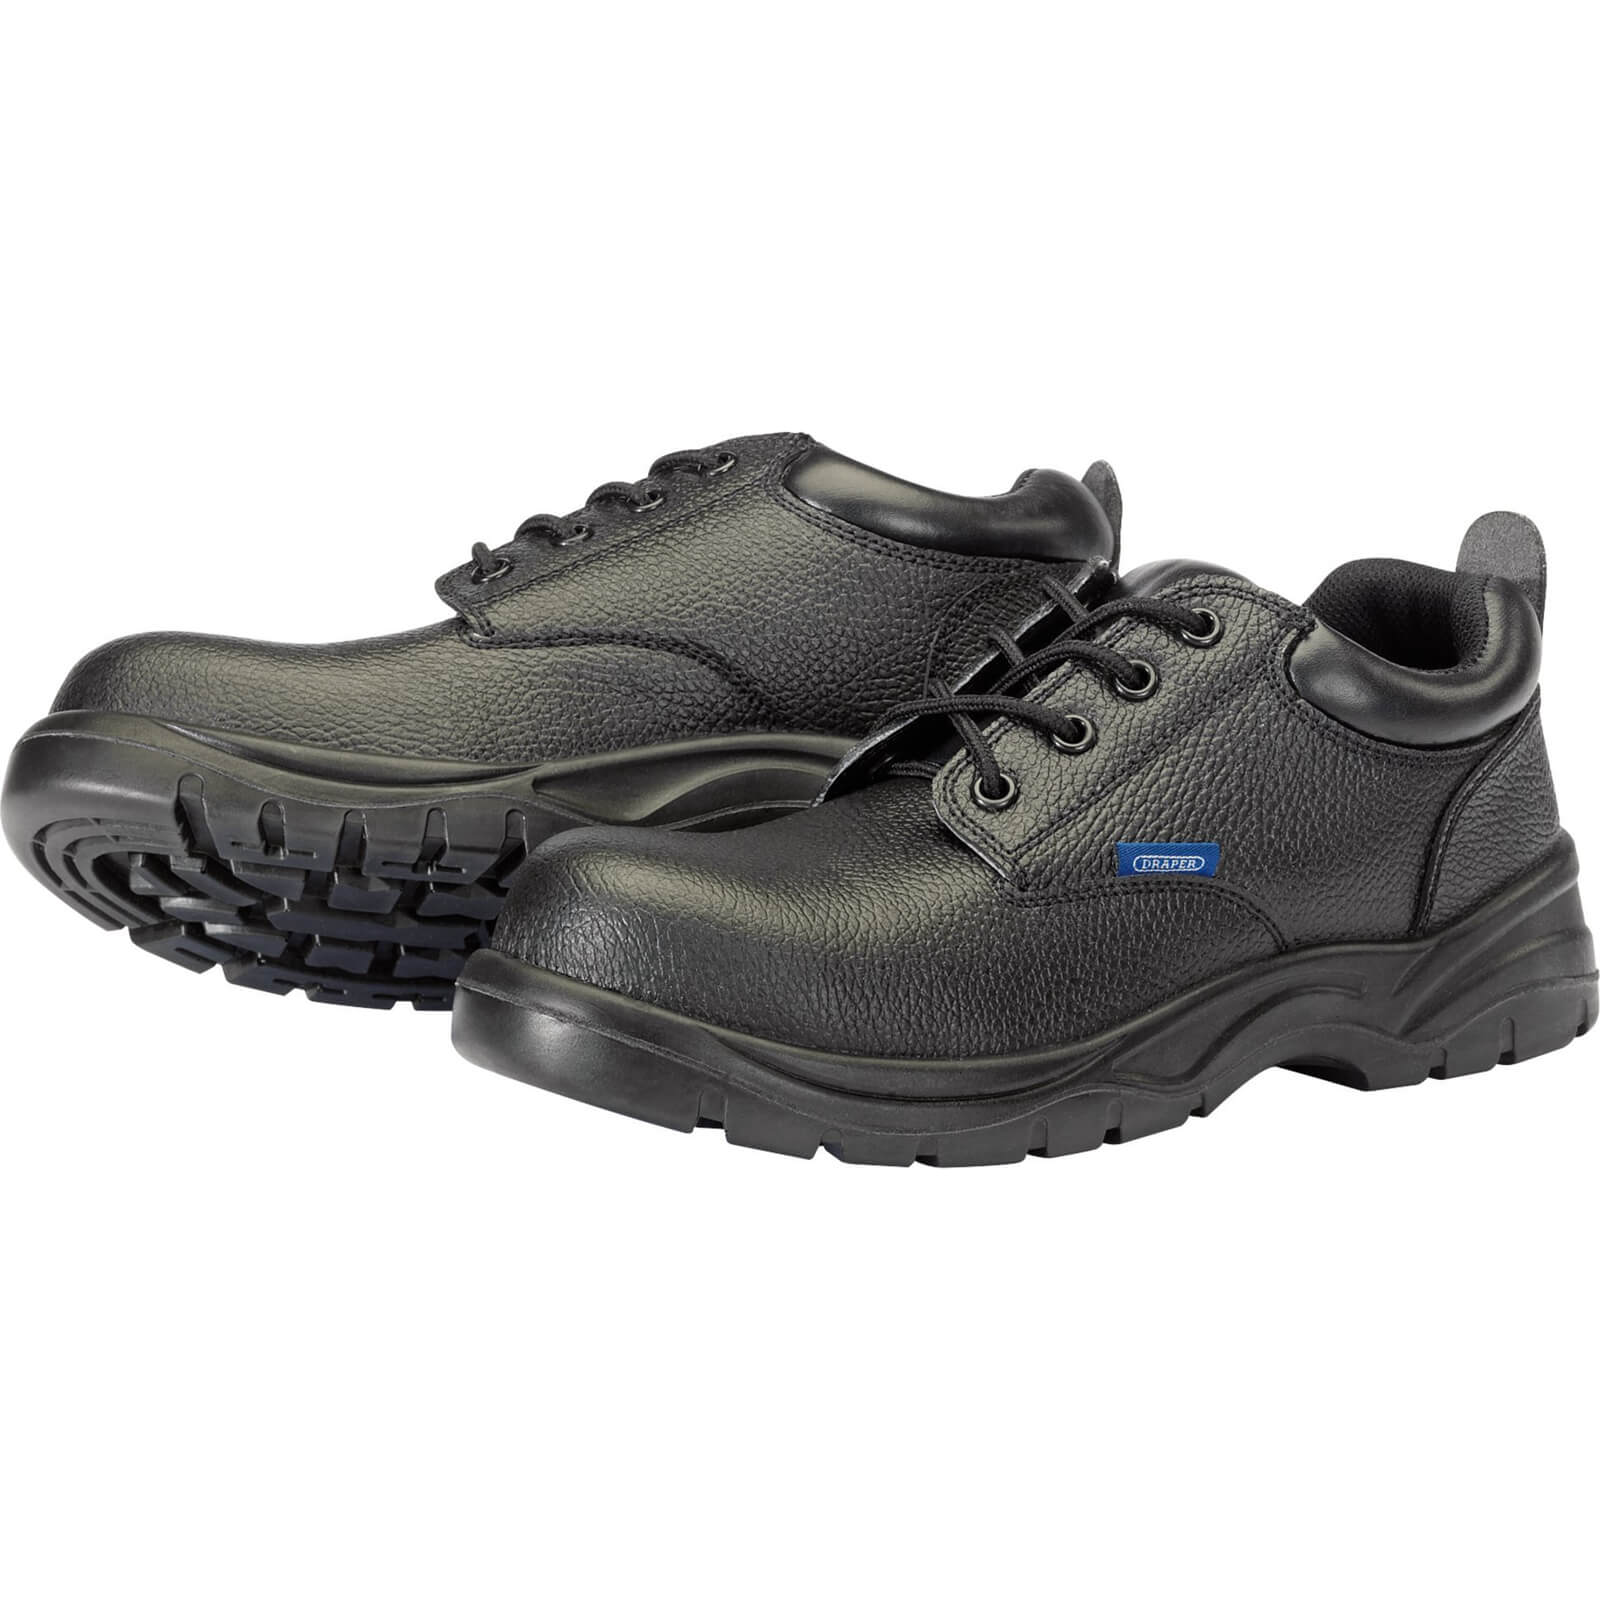 Draper Non Metallic Composite Safety Shoe Size 6